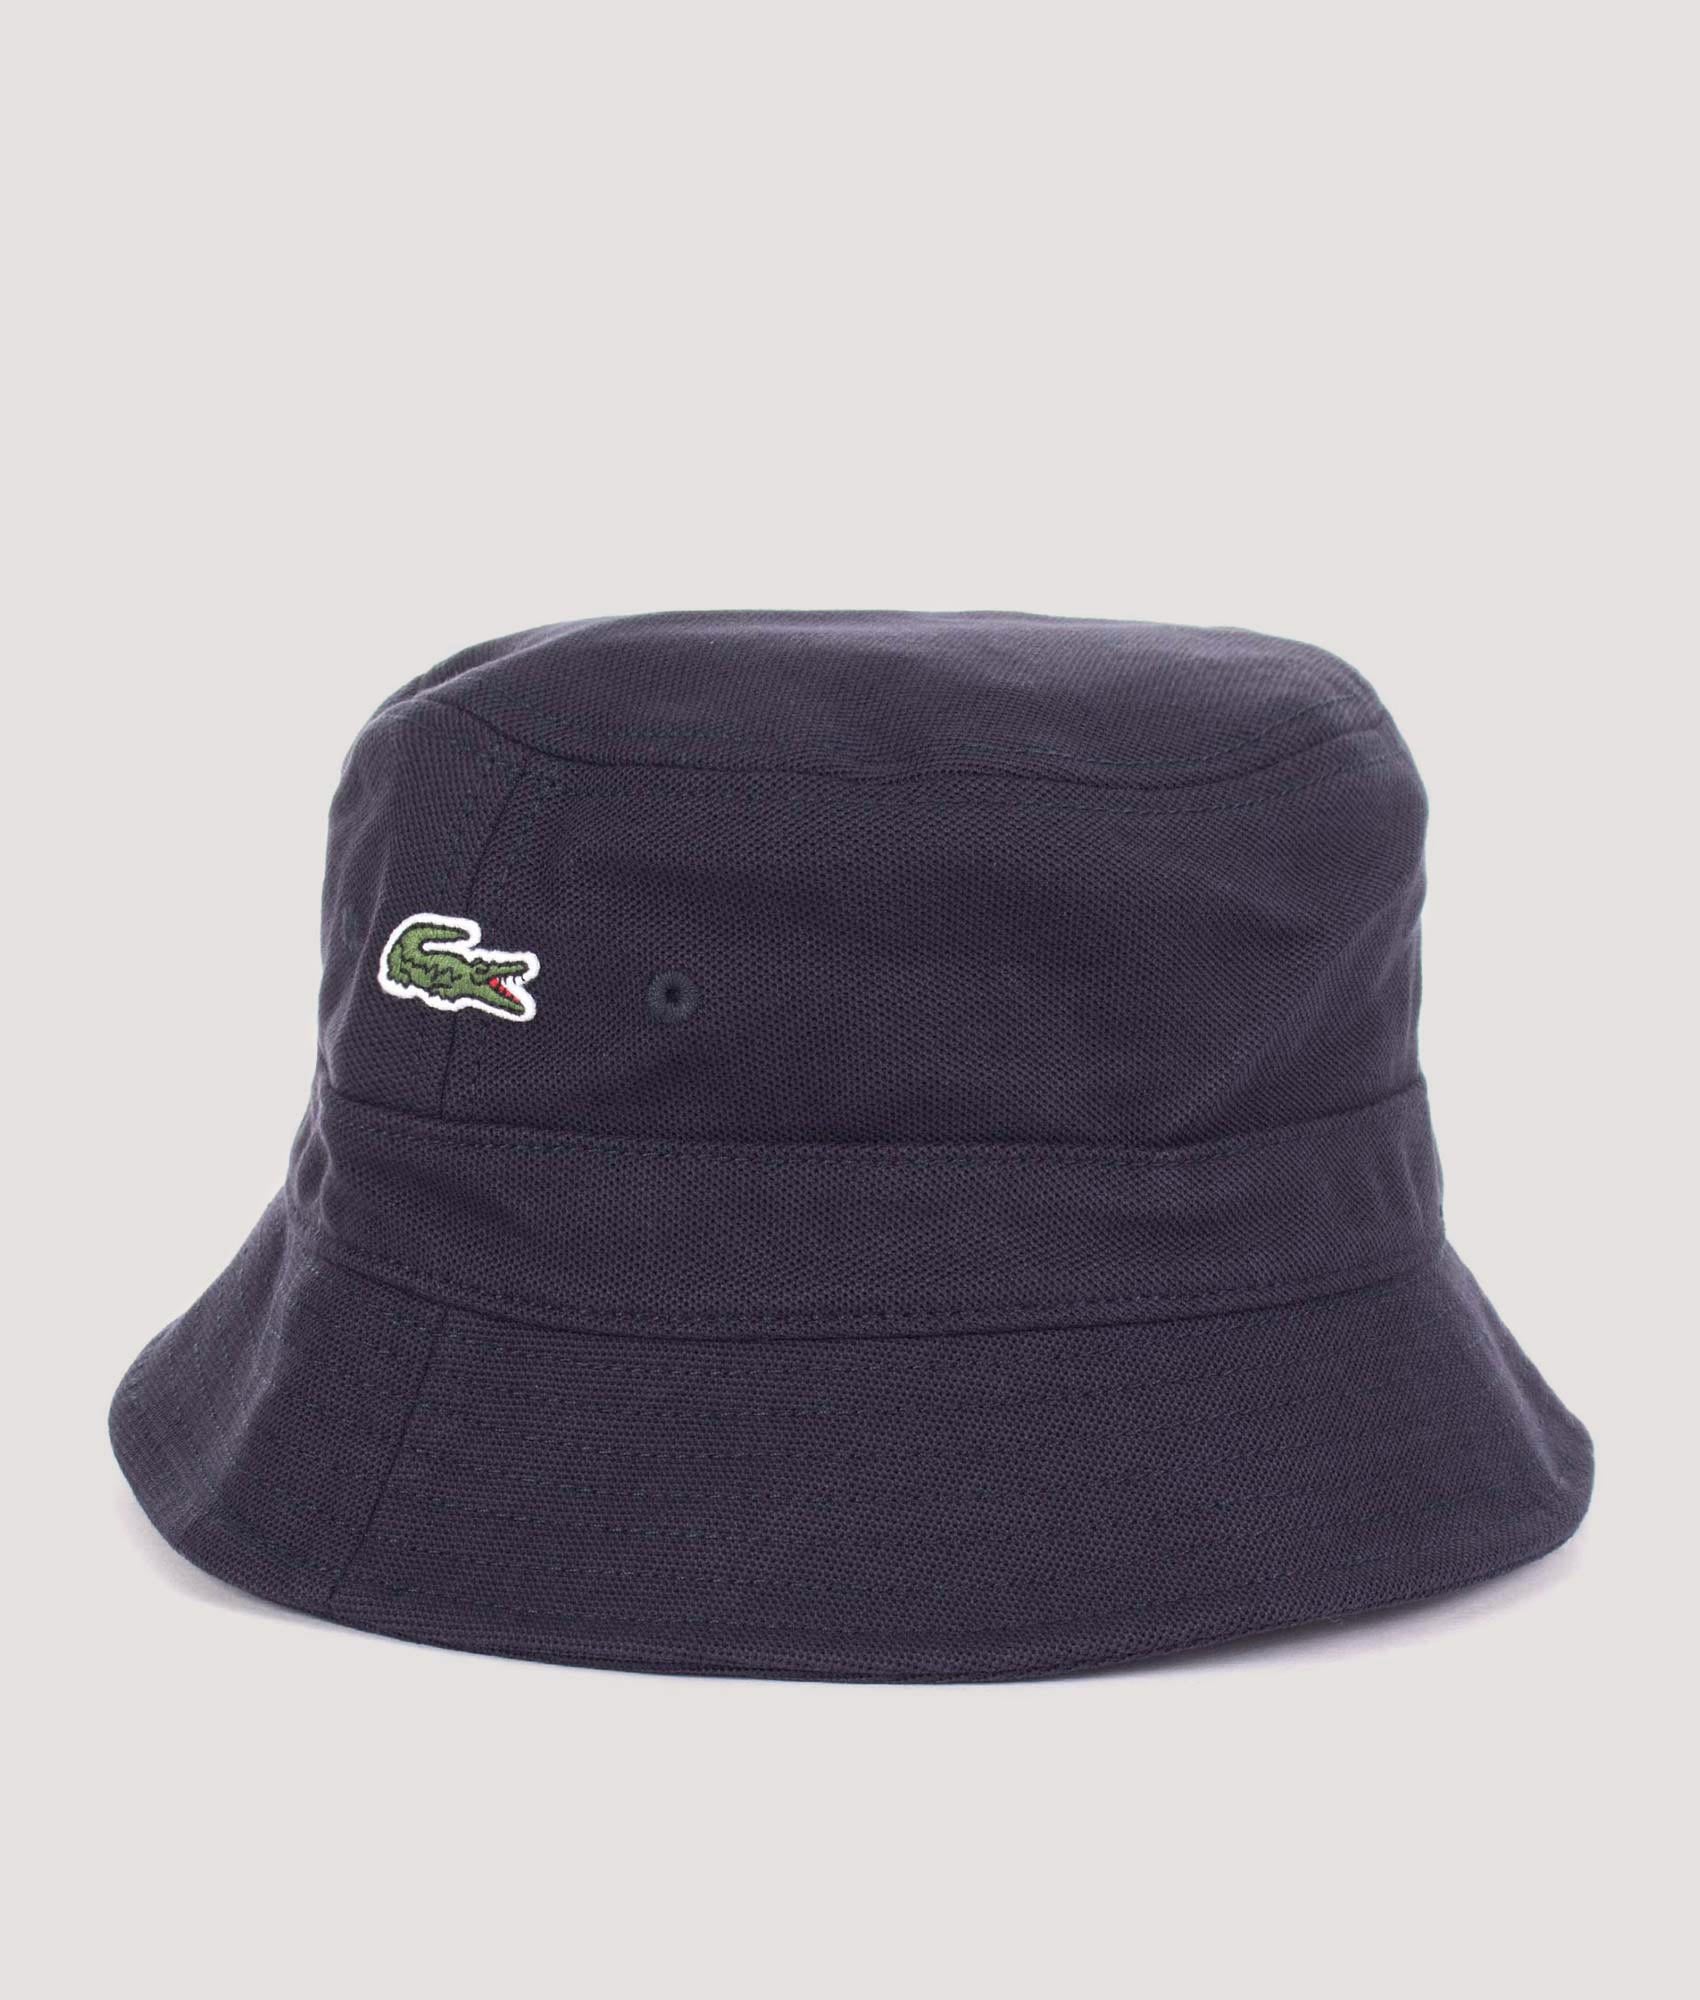 Lacoste Mens Bucket Hat - Colour: HDE Abysm Navy - Size: Medium